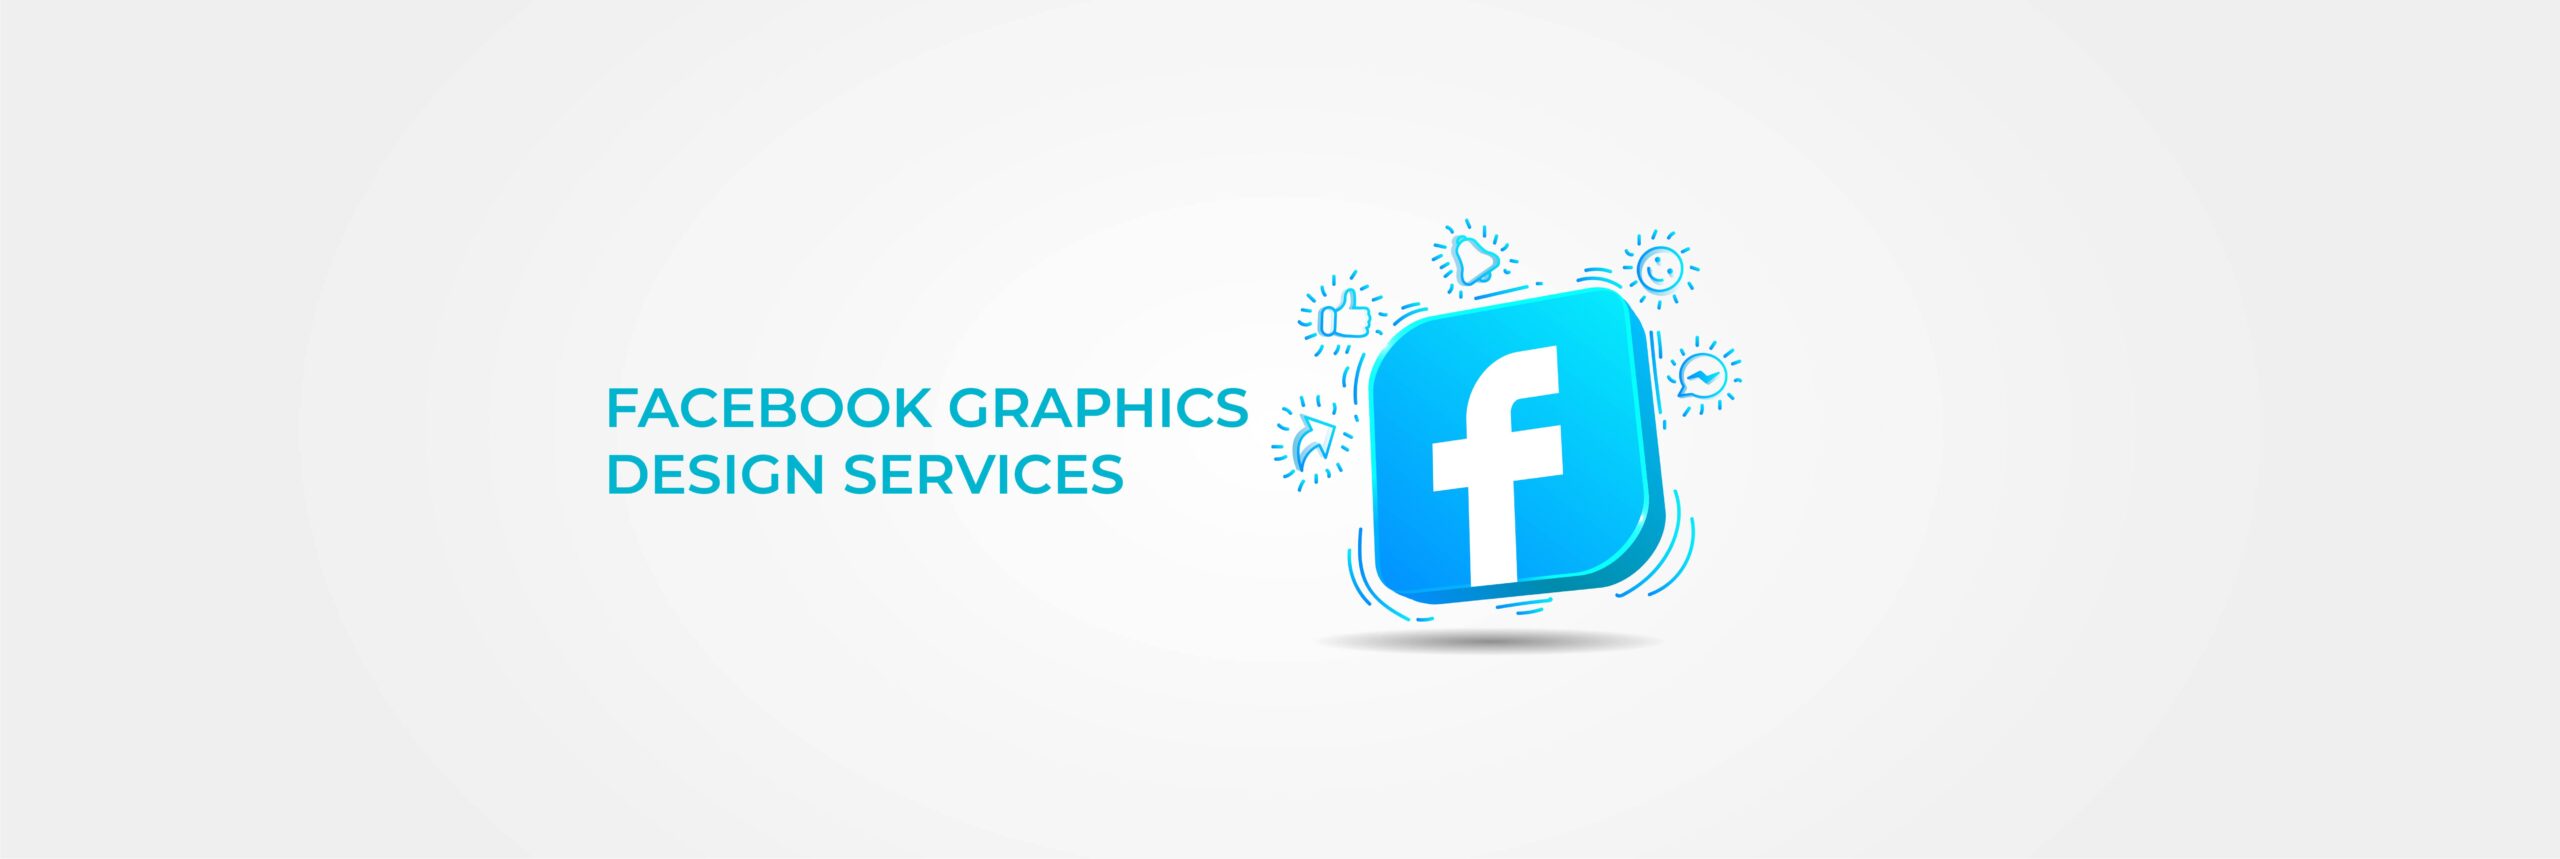 FACEBOOK GRAPHICS DESIGN SERVICES